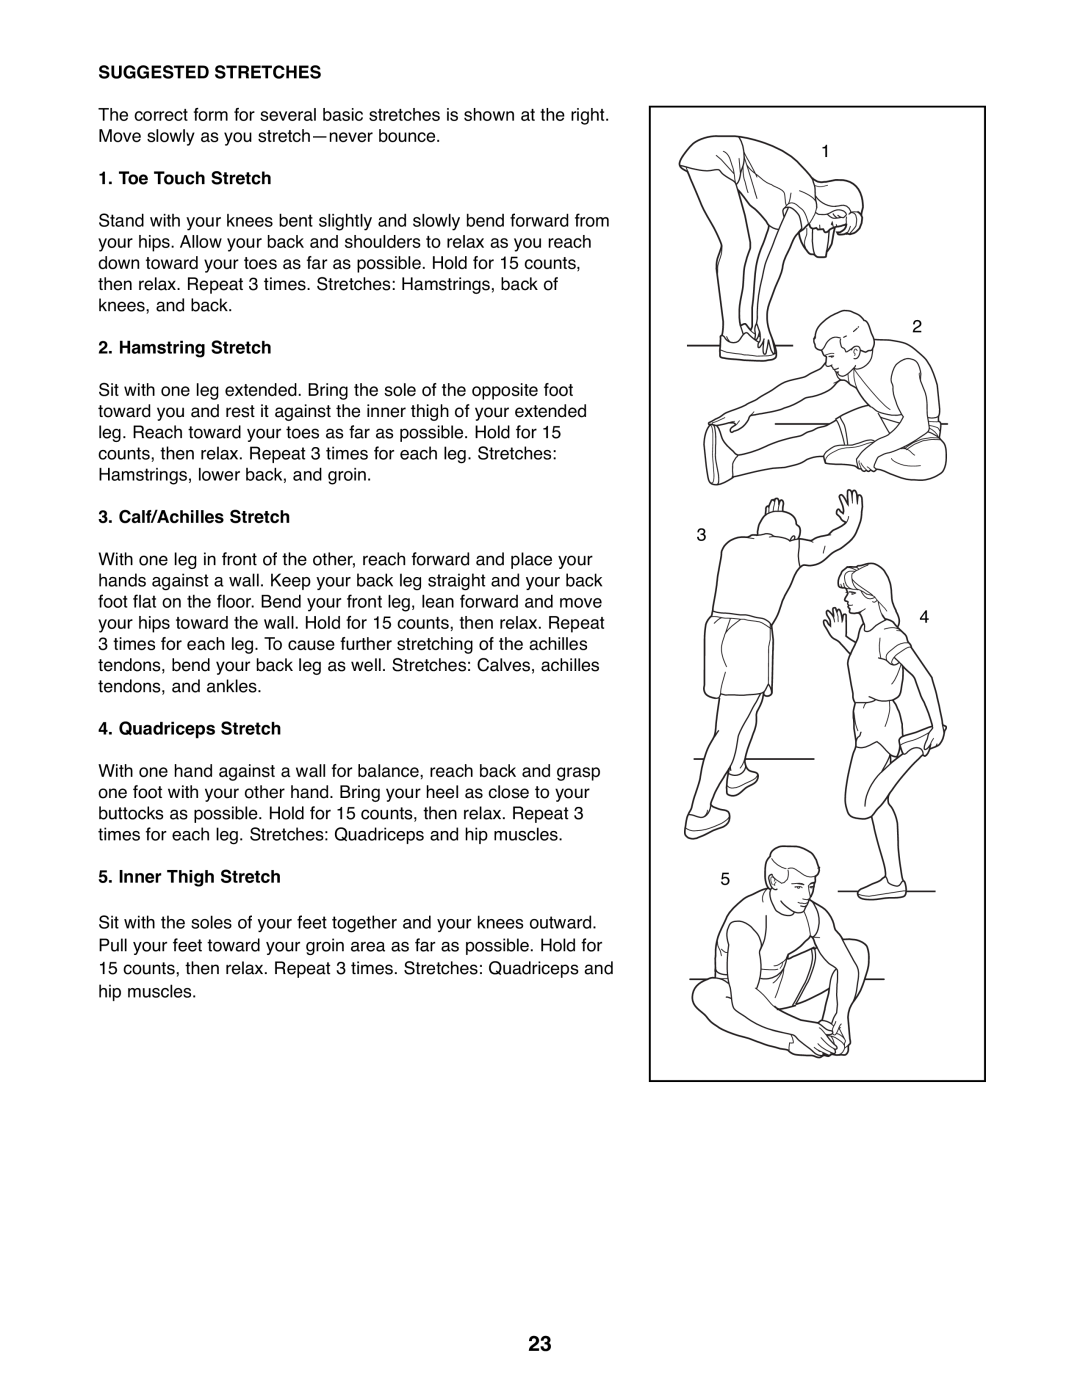 ProForm 831.23744.0 Suggested Stretches, Toe Touch Stretch, Hamstring Stretch, Calf/Achilles Stretch, Quadriceps Stretch 